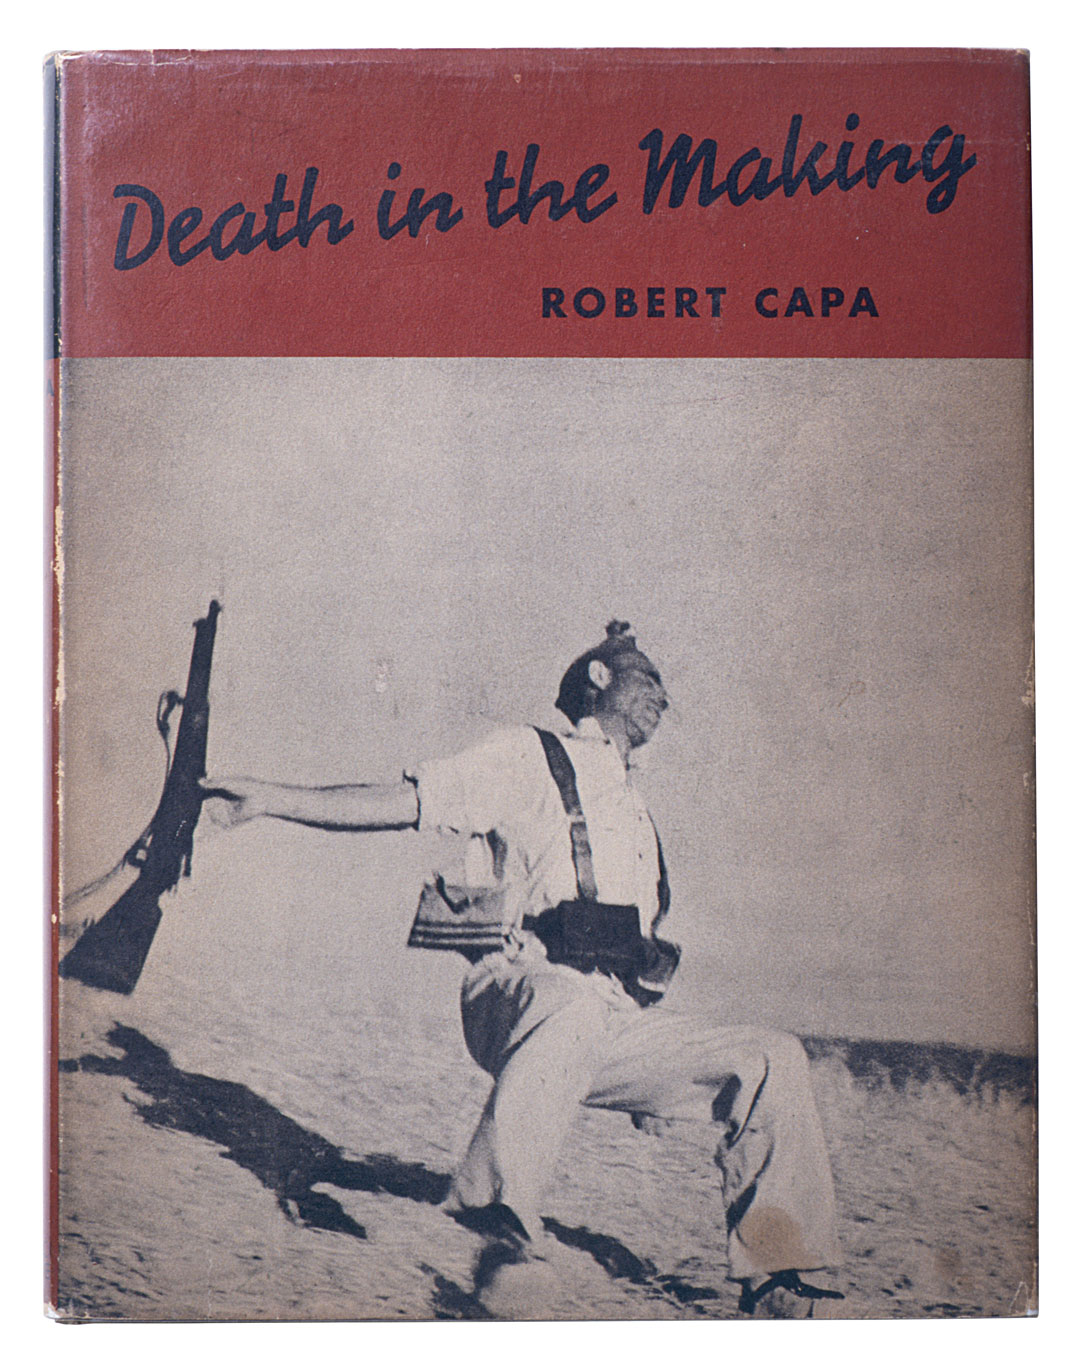 The war that made Robert Capa